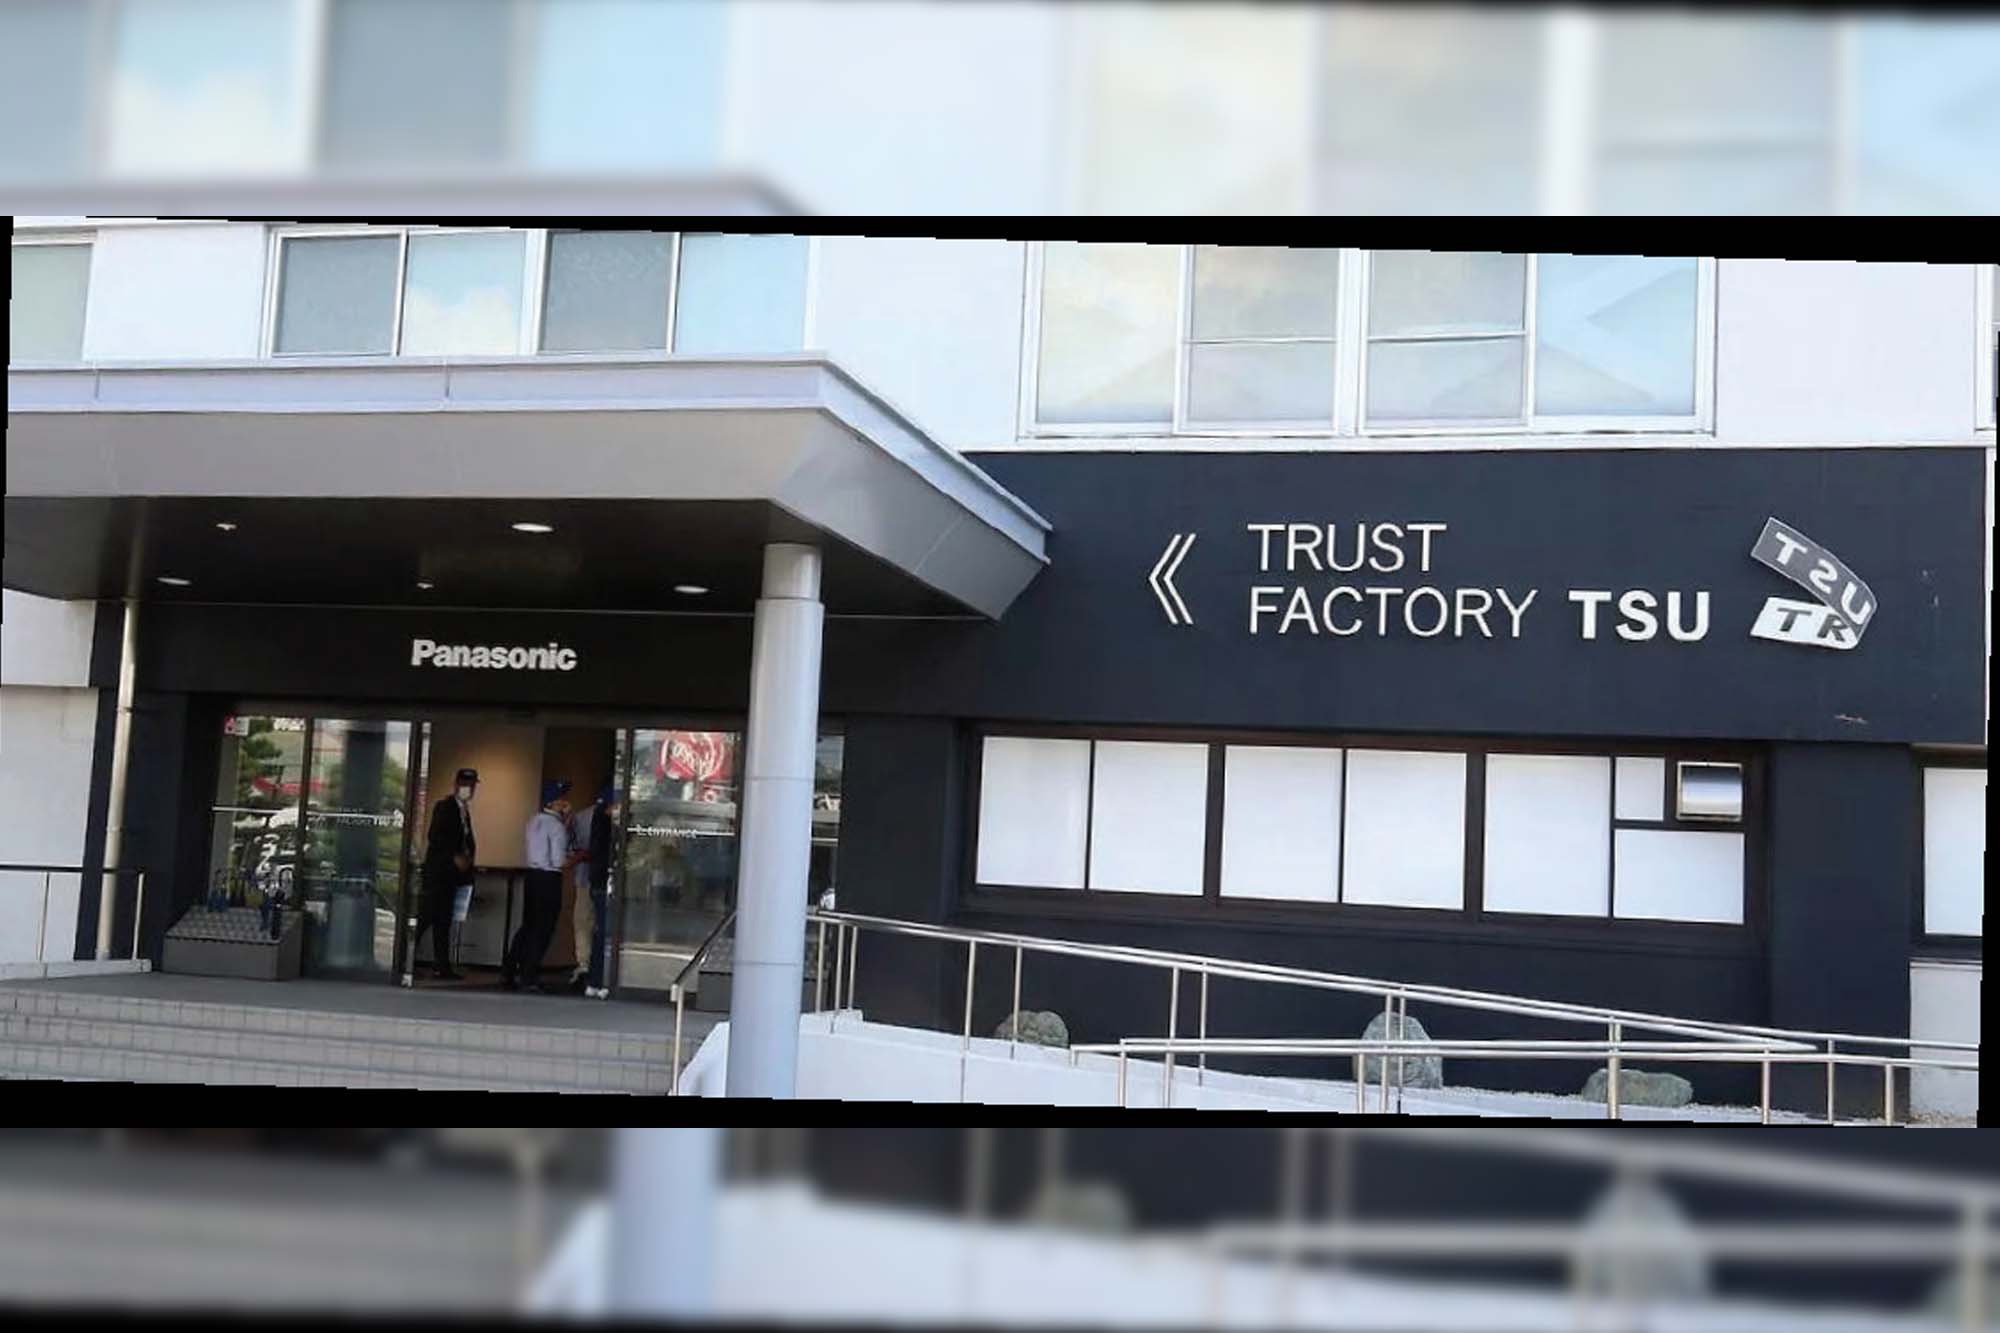 A Journey Through Panasonic Trust Factory Tsu